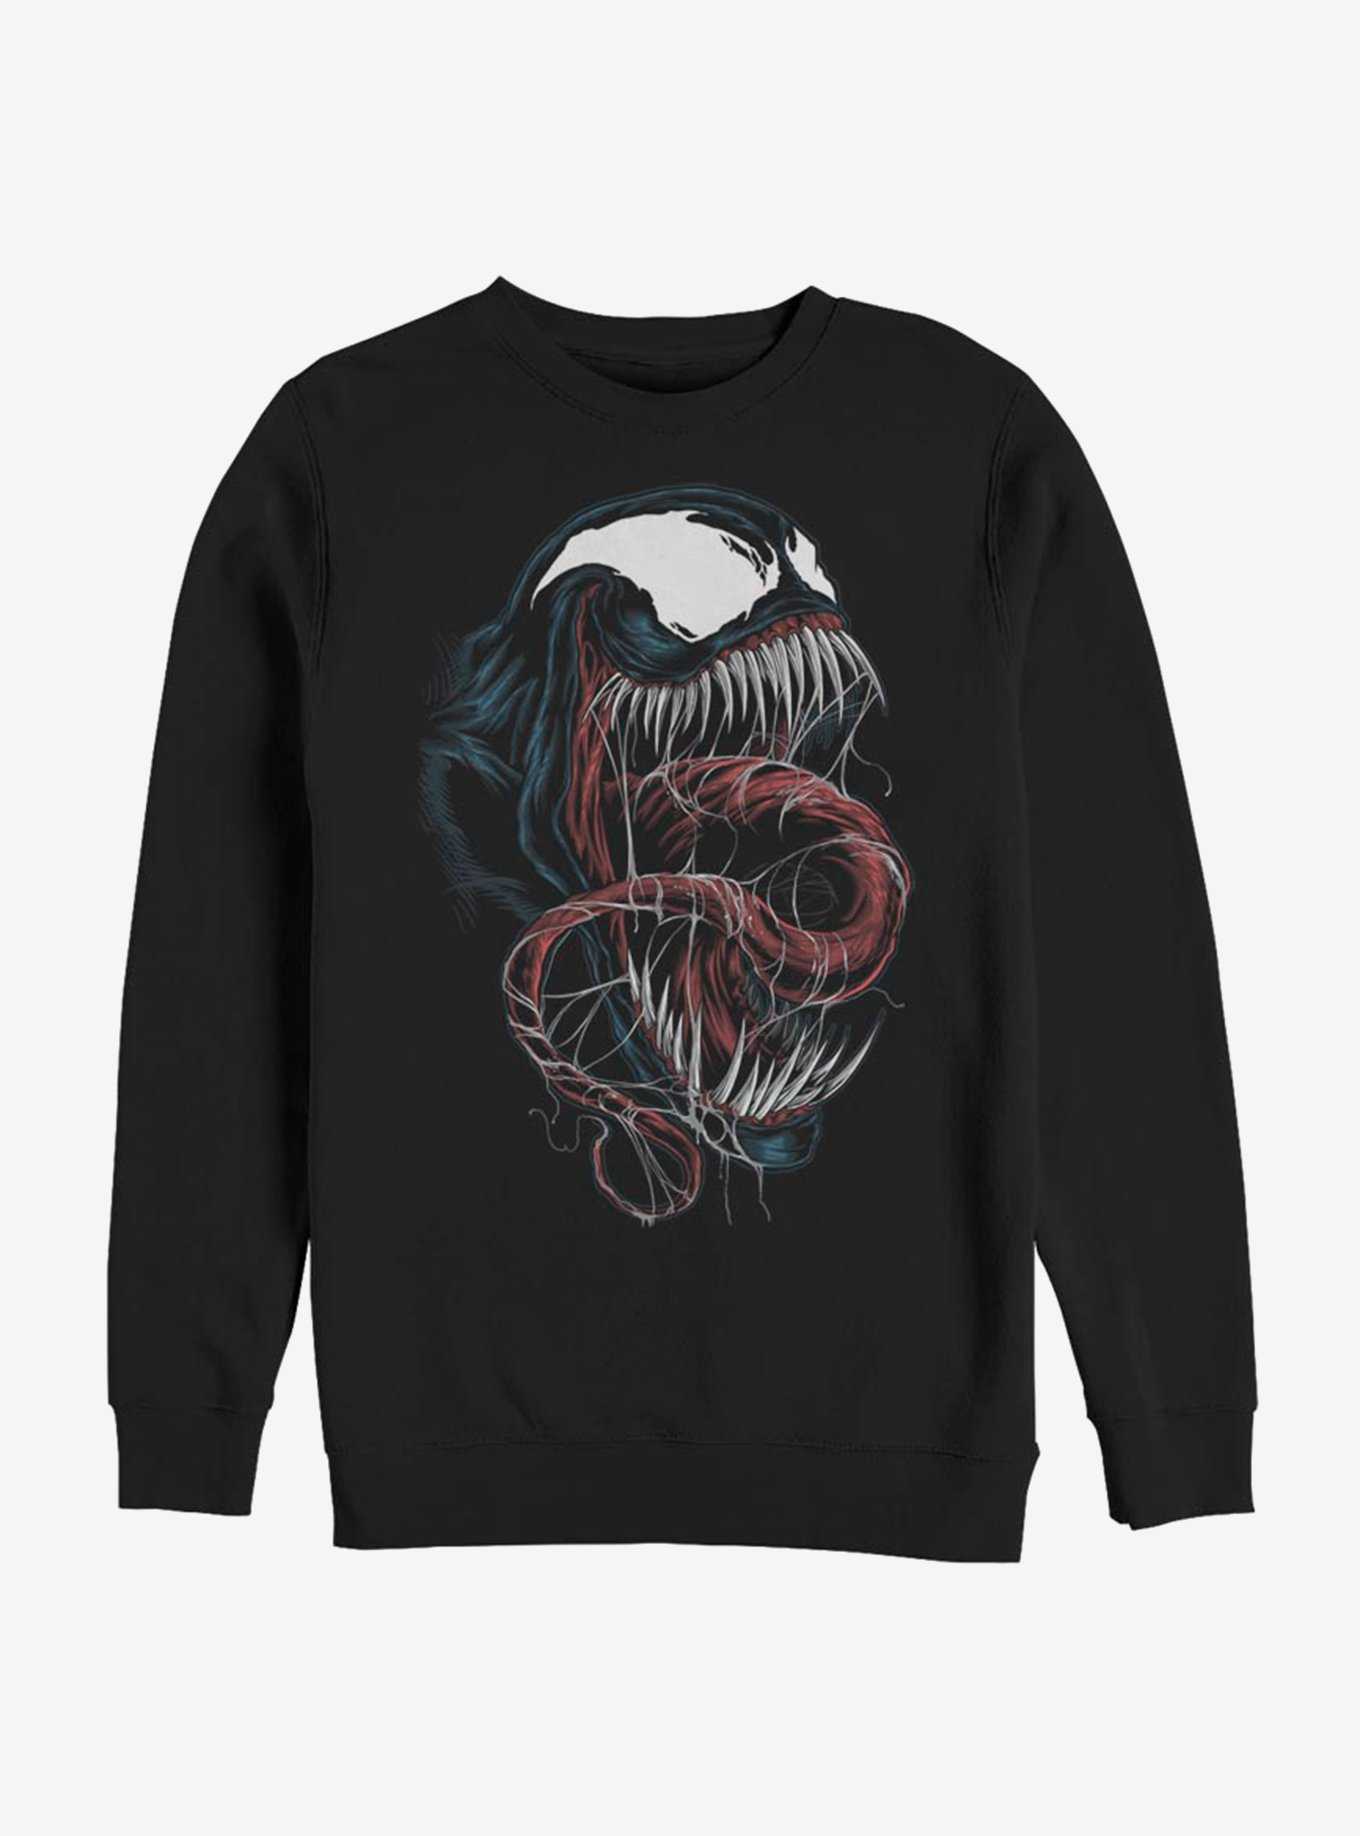 Marvel Venom Classic Sweatshirt, , hi-res